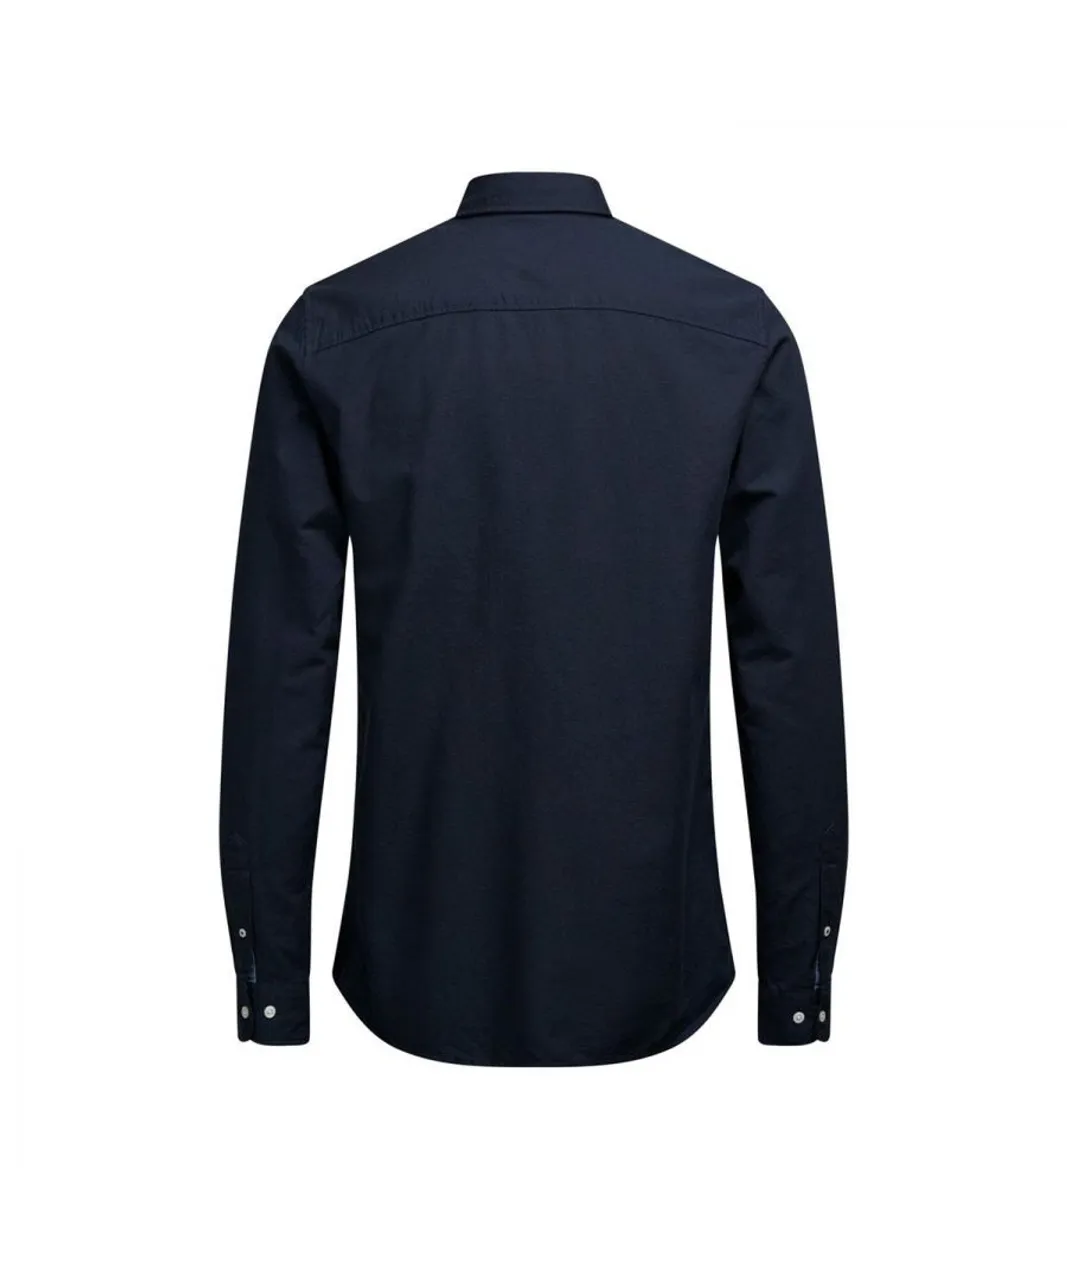 Jack & Jones Mens Shirt Long Sleeve with Collars Slim Fit Casual Top Wear - Navy Cotton